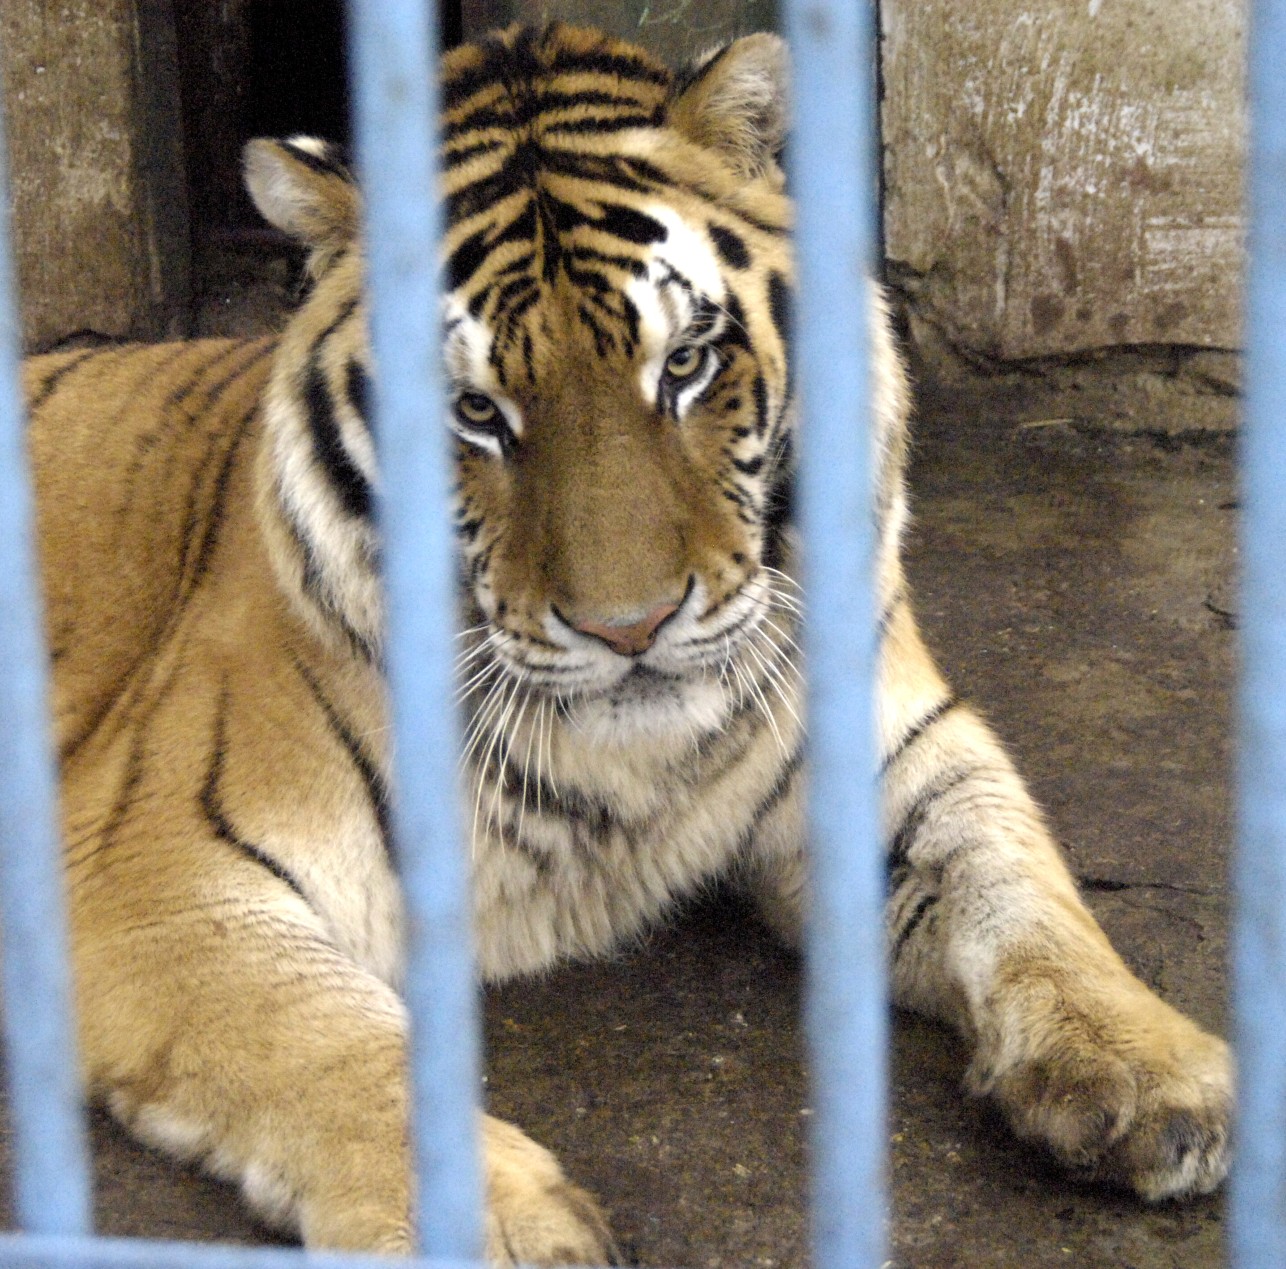 Wild animals in captivity | Born Free